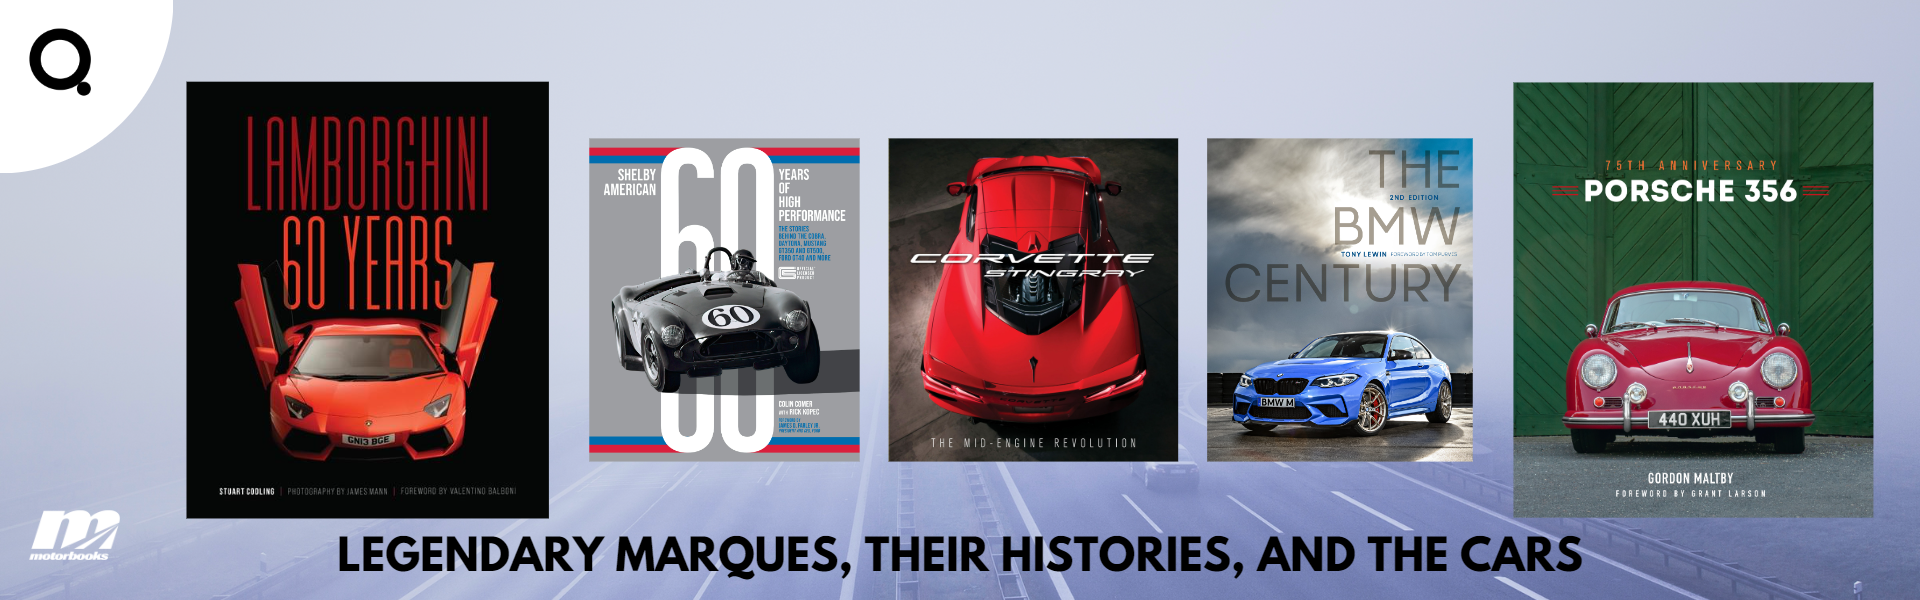 Banner featuring Motorbooks titles: Corvette Stingray, Shelby American 60 Years, Porsche 356 75th Anniversary, Lamborghini 60 Years, The BMW Century